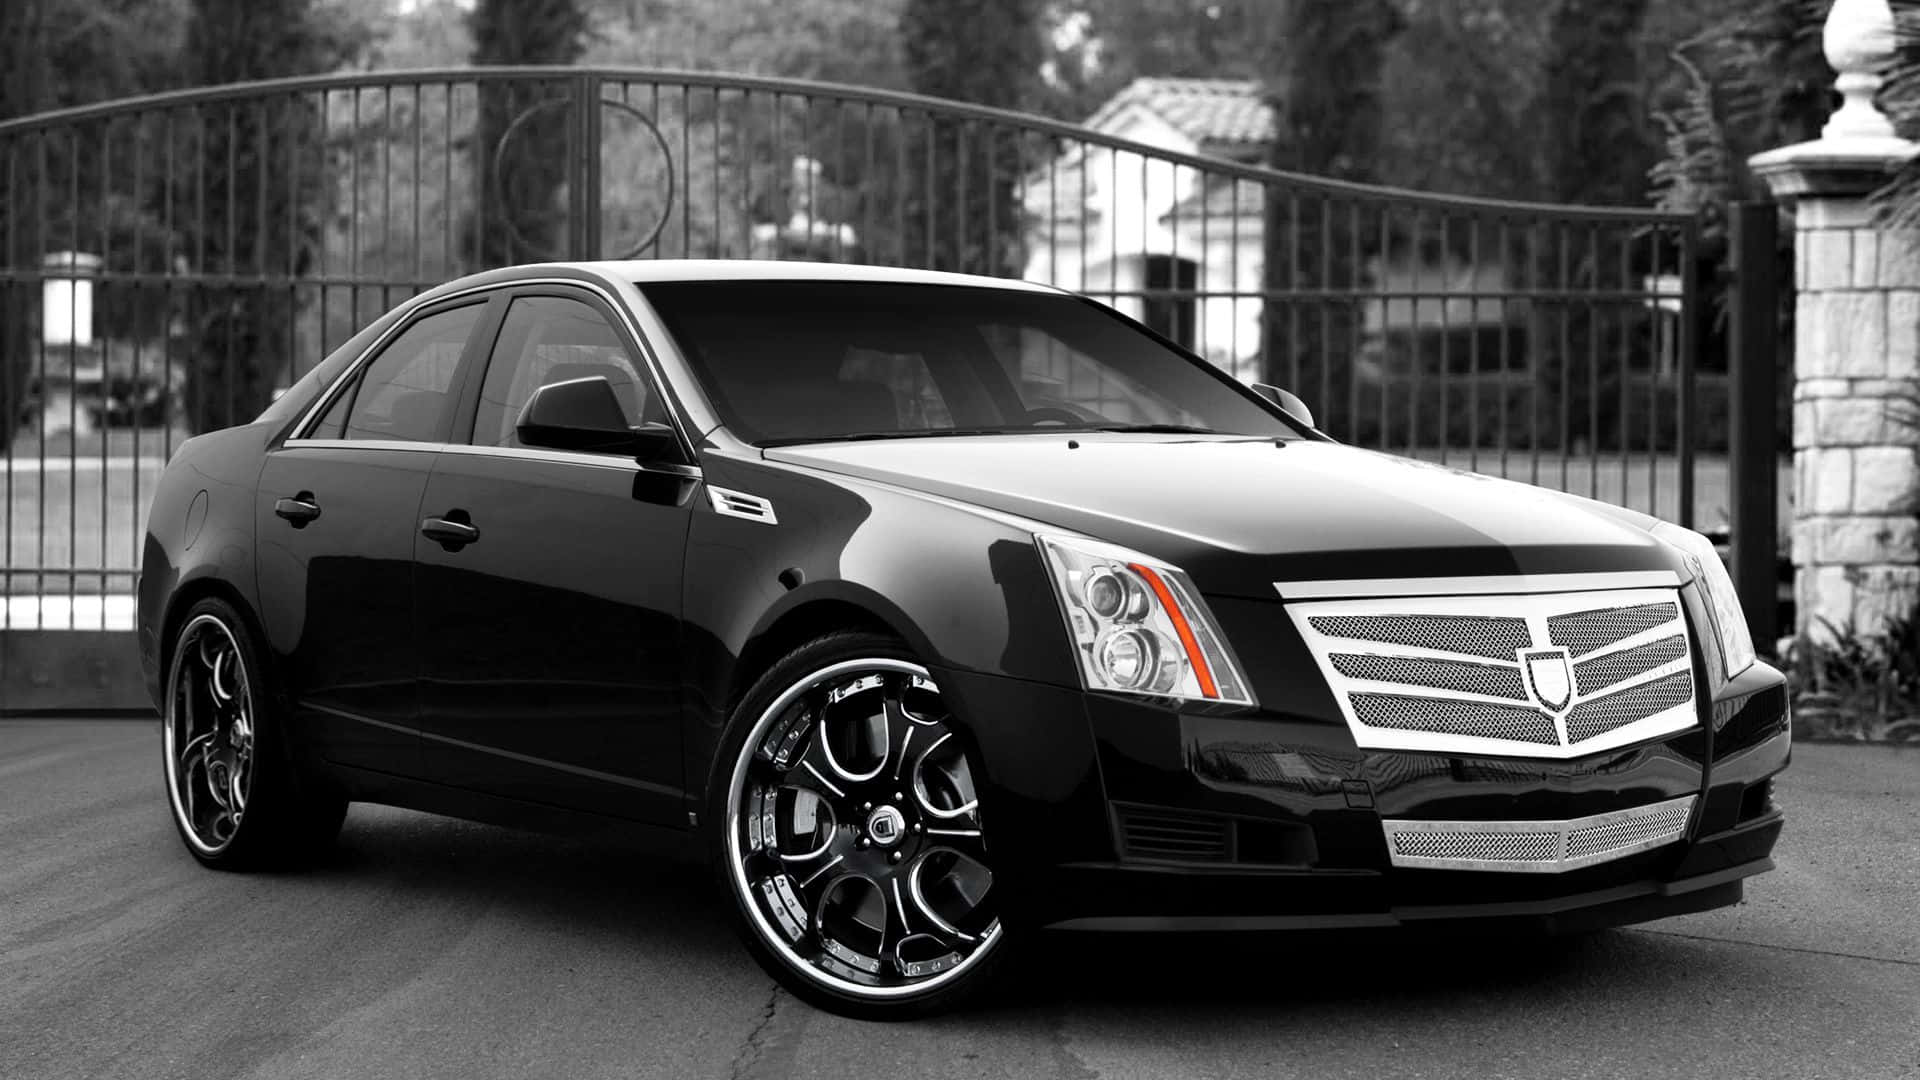 Sleek Black Cadillac CTS on the Road Wallpaper